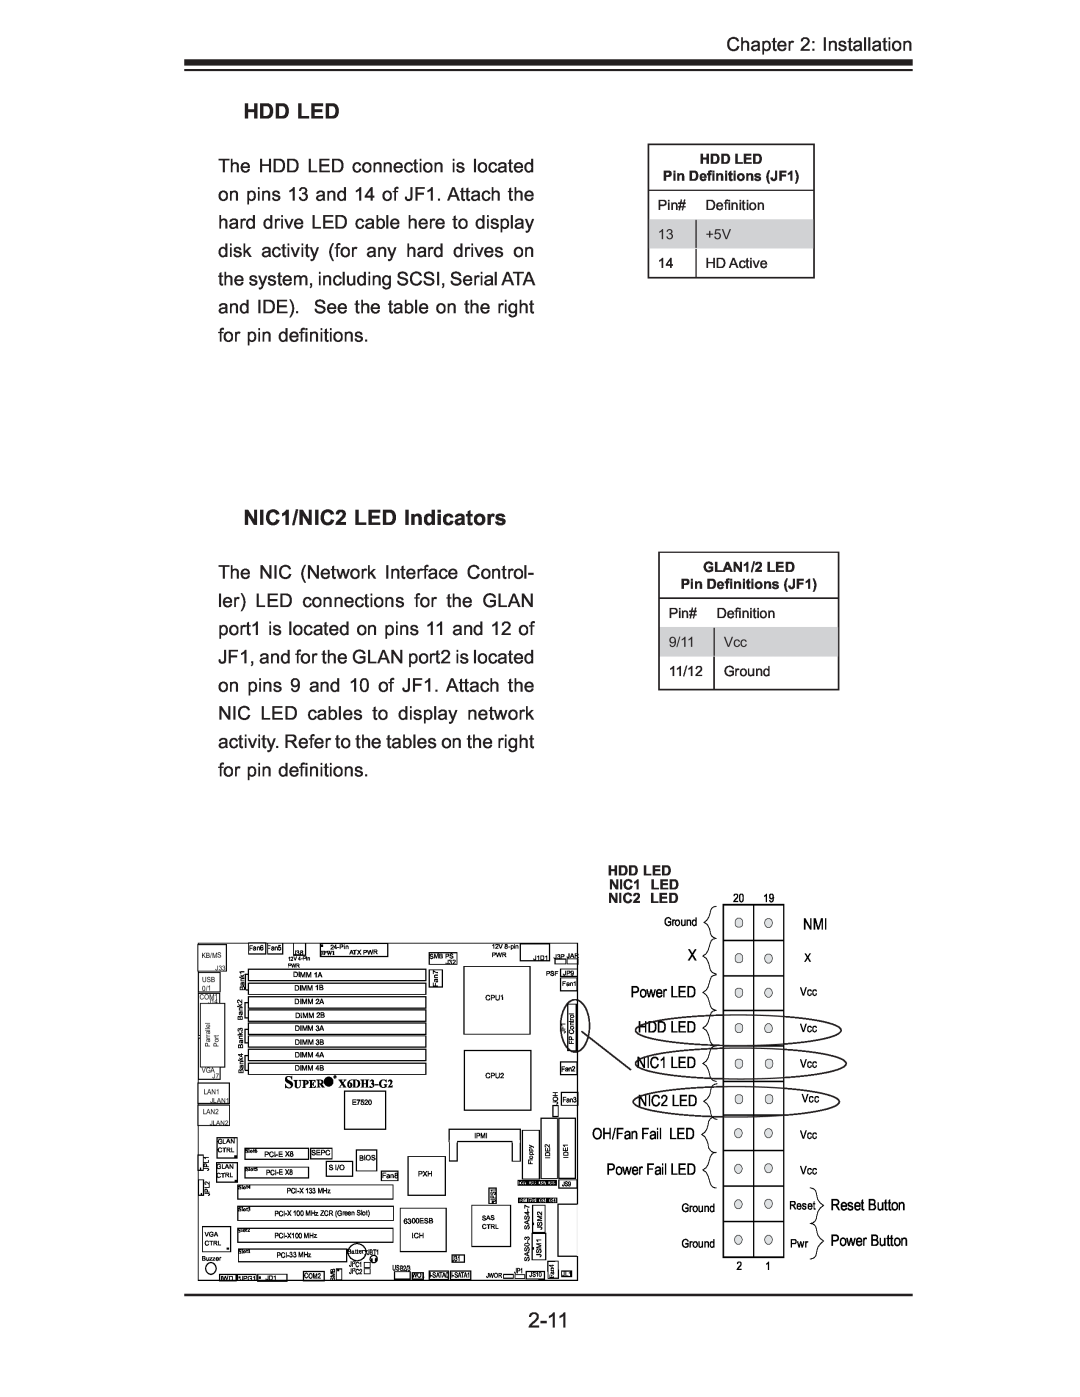 SUPER MICRO Computer X6DH3-G2, X6DHi-G2 Hdd Led, NIC1/NIC2 LED Indicators, 2-11, X Power LED HDD LED NIC1 LED NIC2 LED 